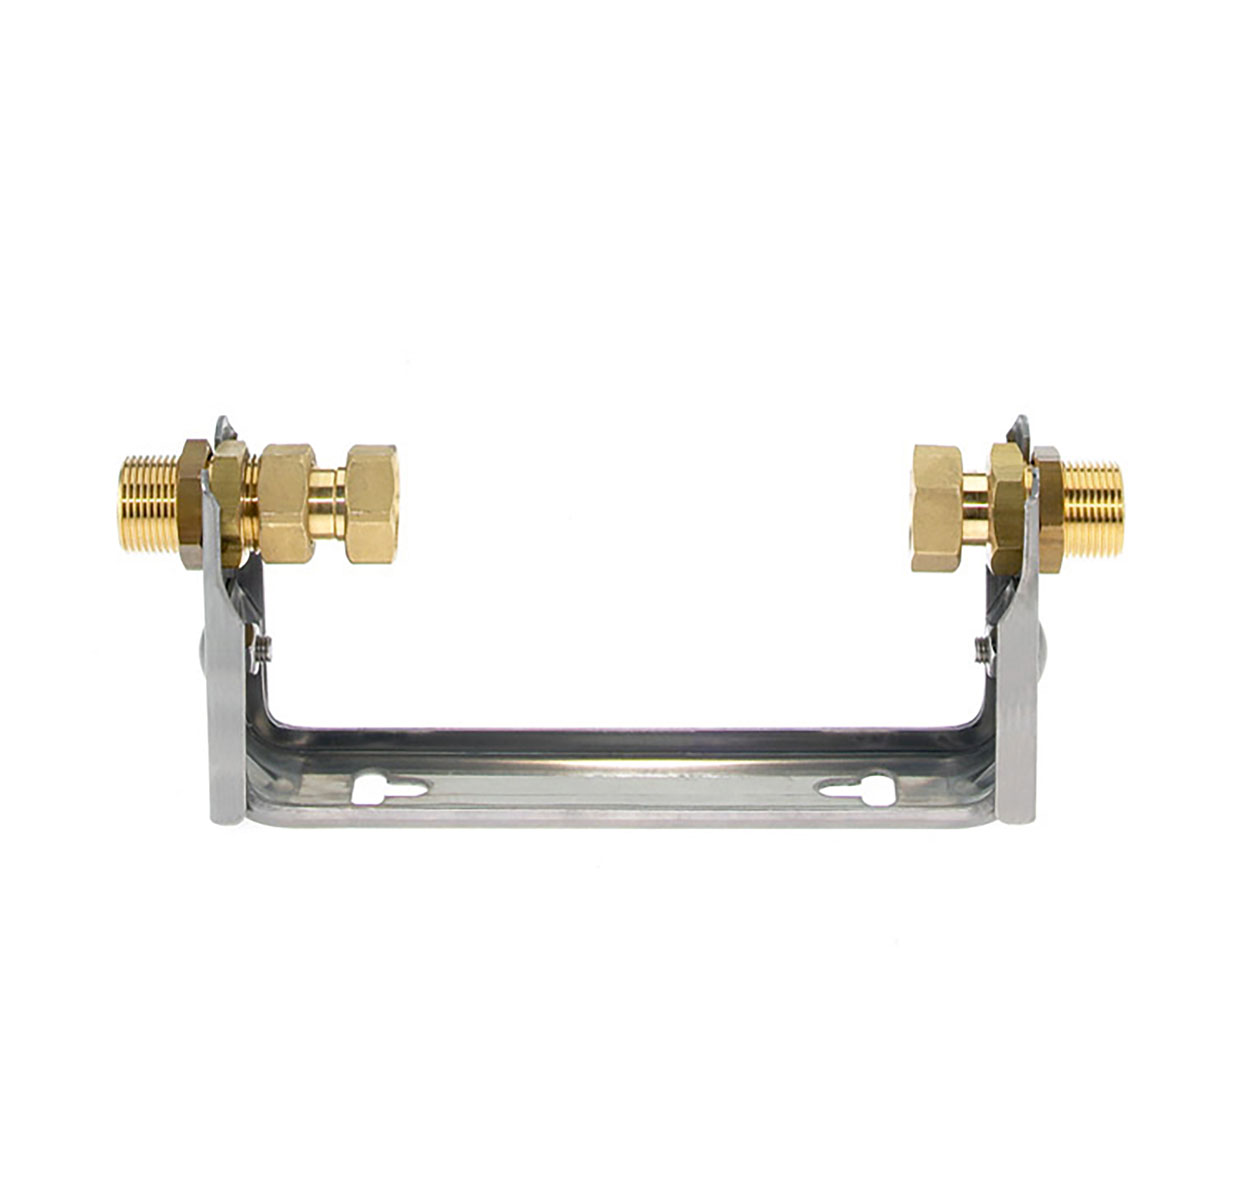 5080250 - Water meter Connection kit bracket adjustable, horizontal installation